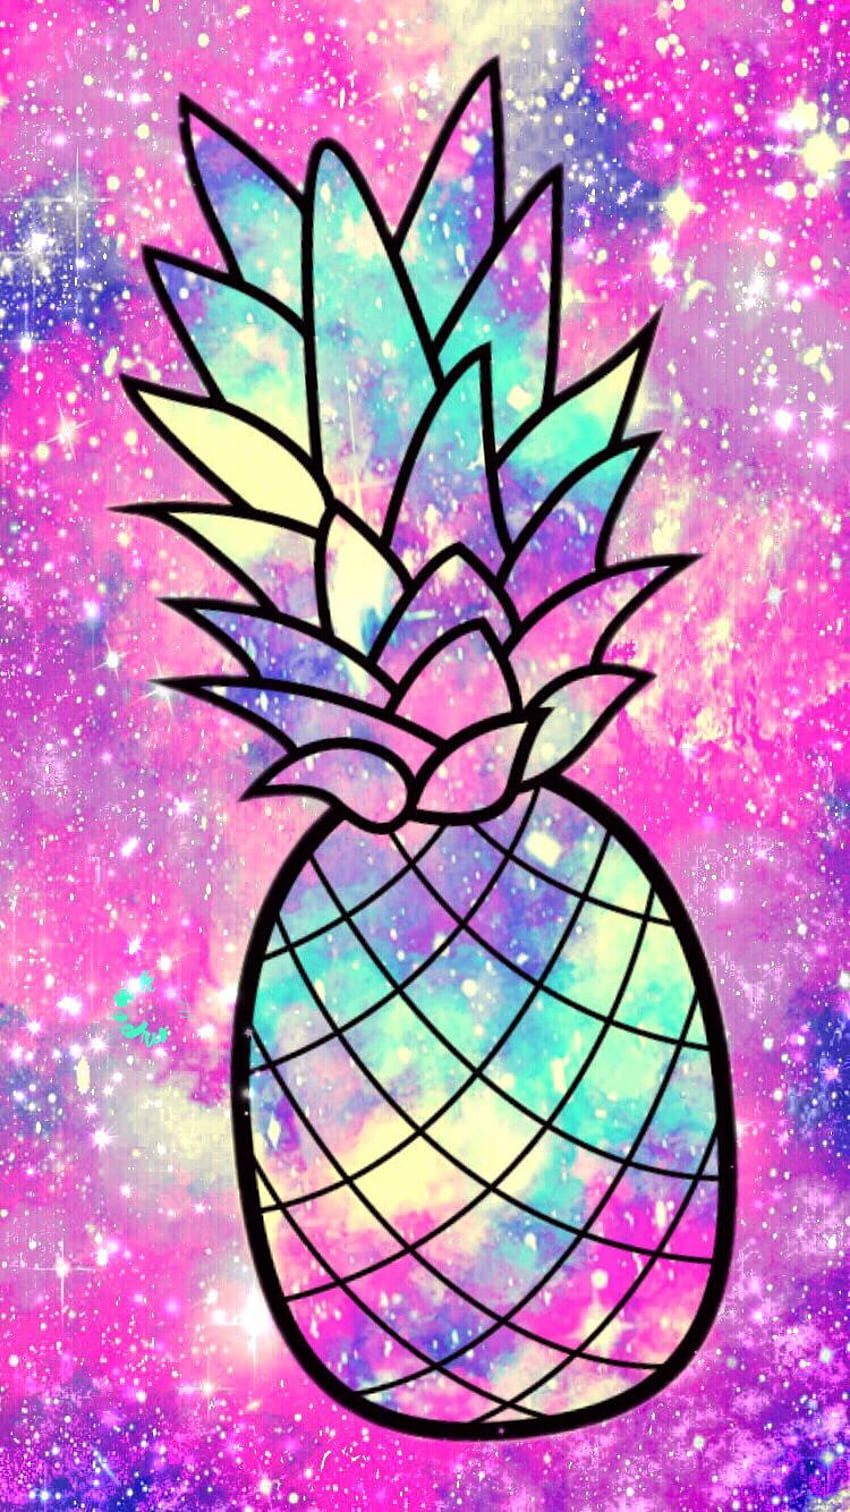 Fruity Pineapple Galaxy IPhone Android yang Saya Buat wallpaper ponsel HD